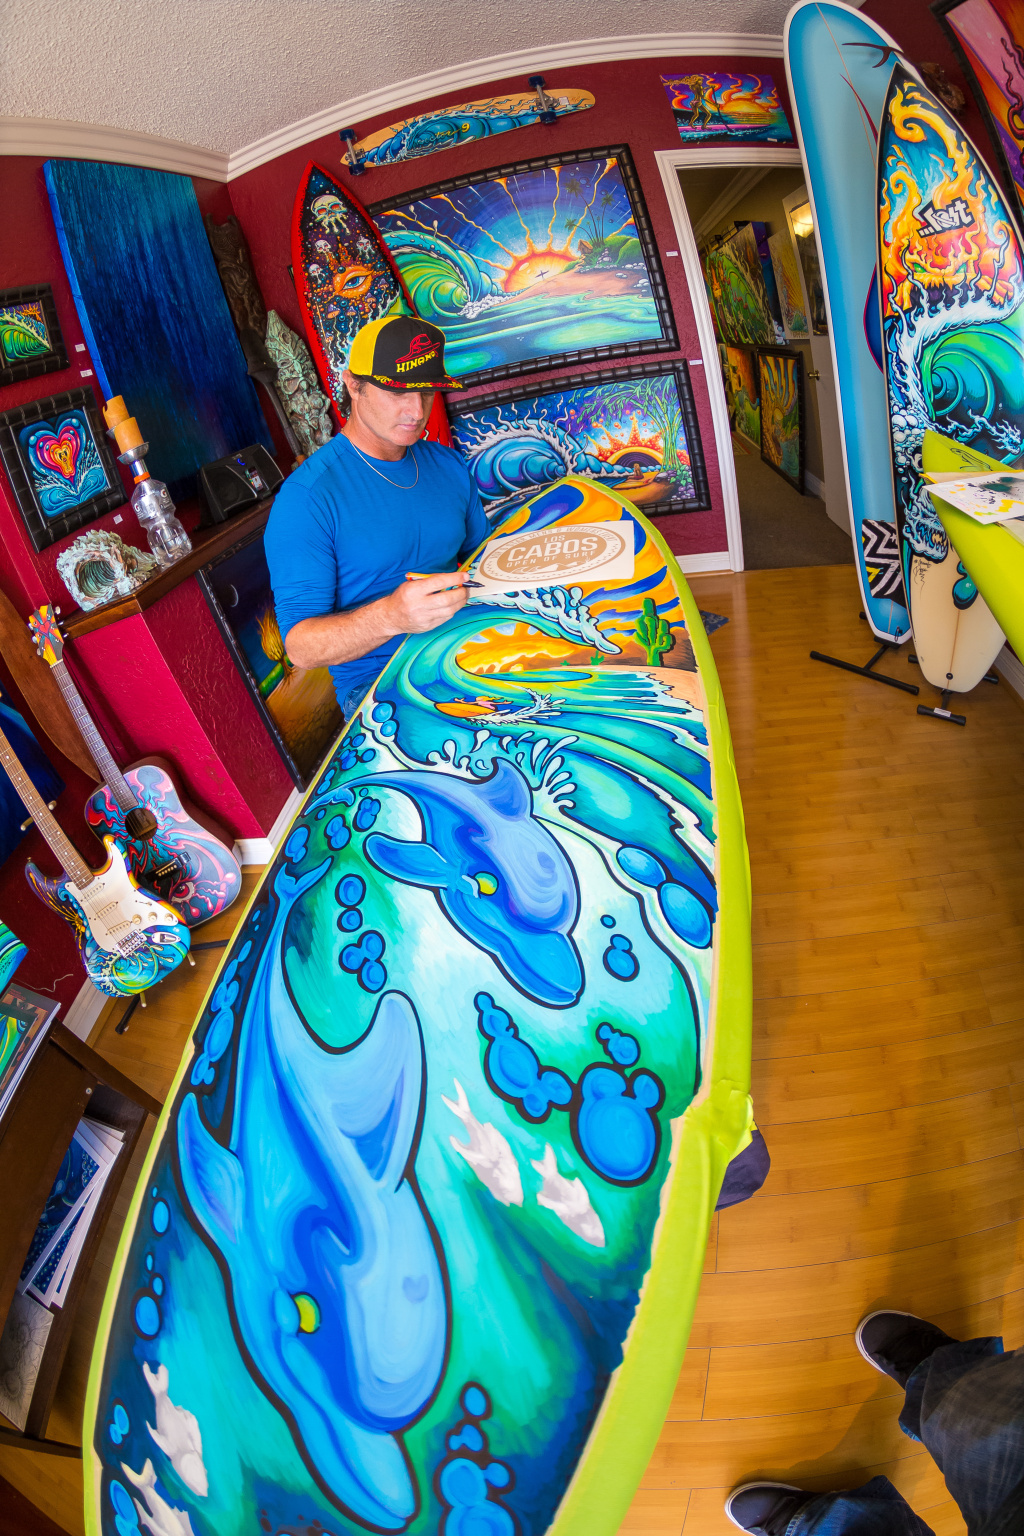 Posca Surfboard Paint Pen - Broad Tip — Greenlight Surf Co.